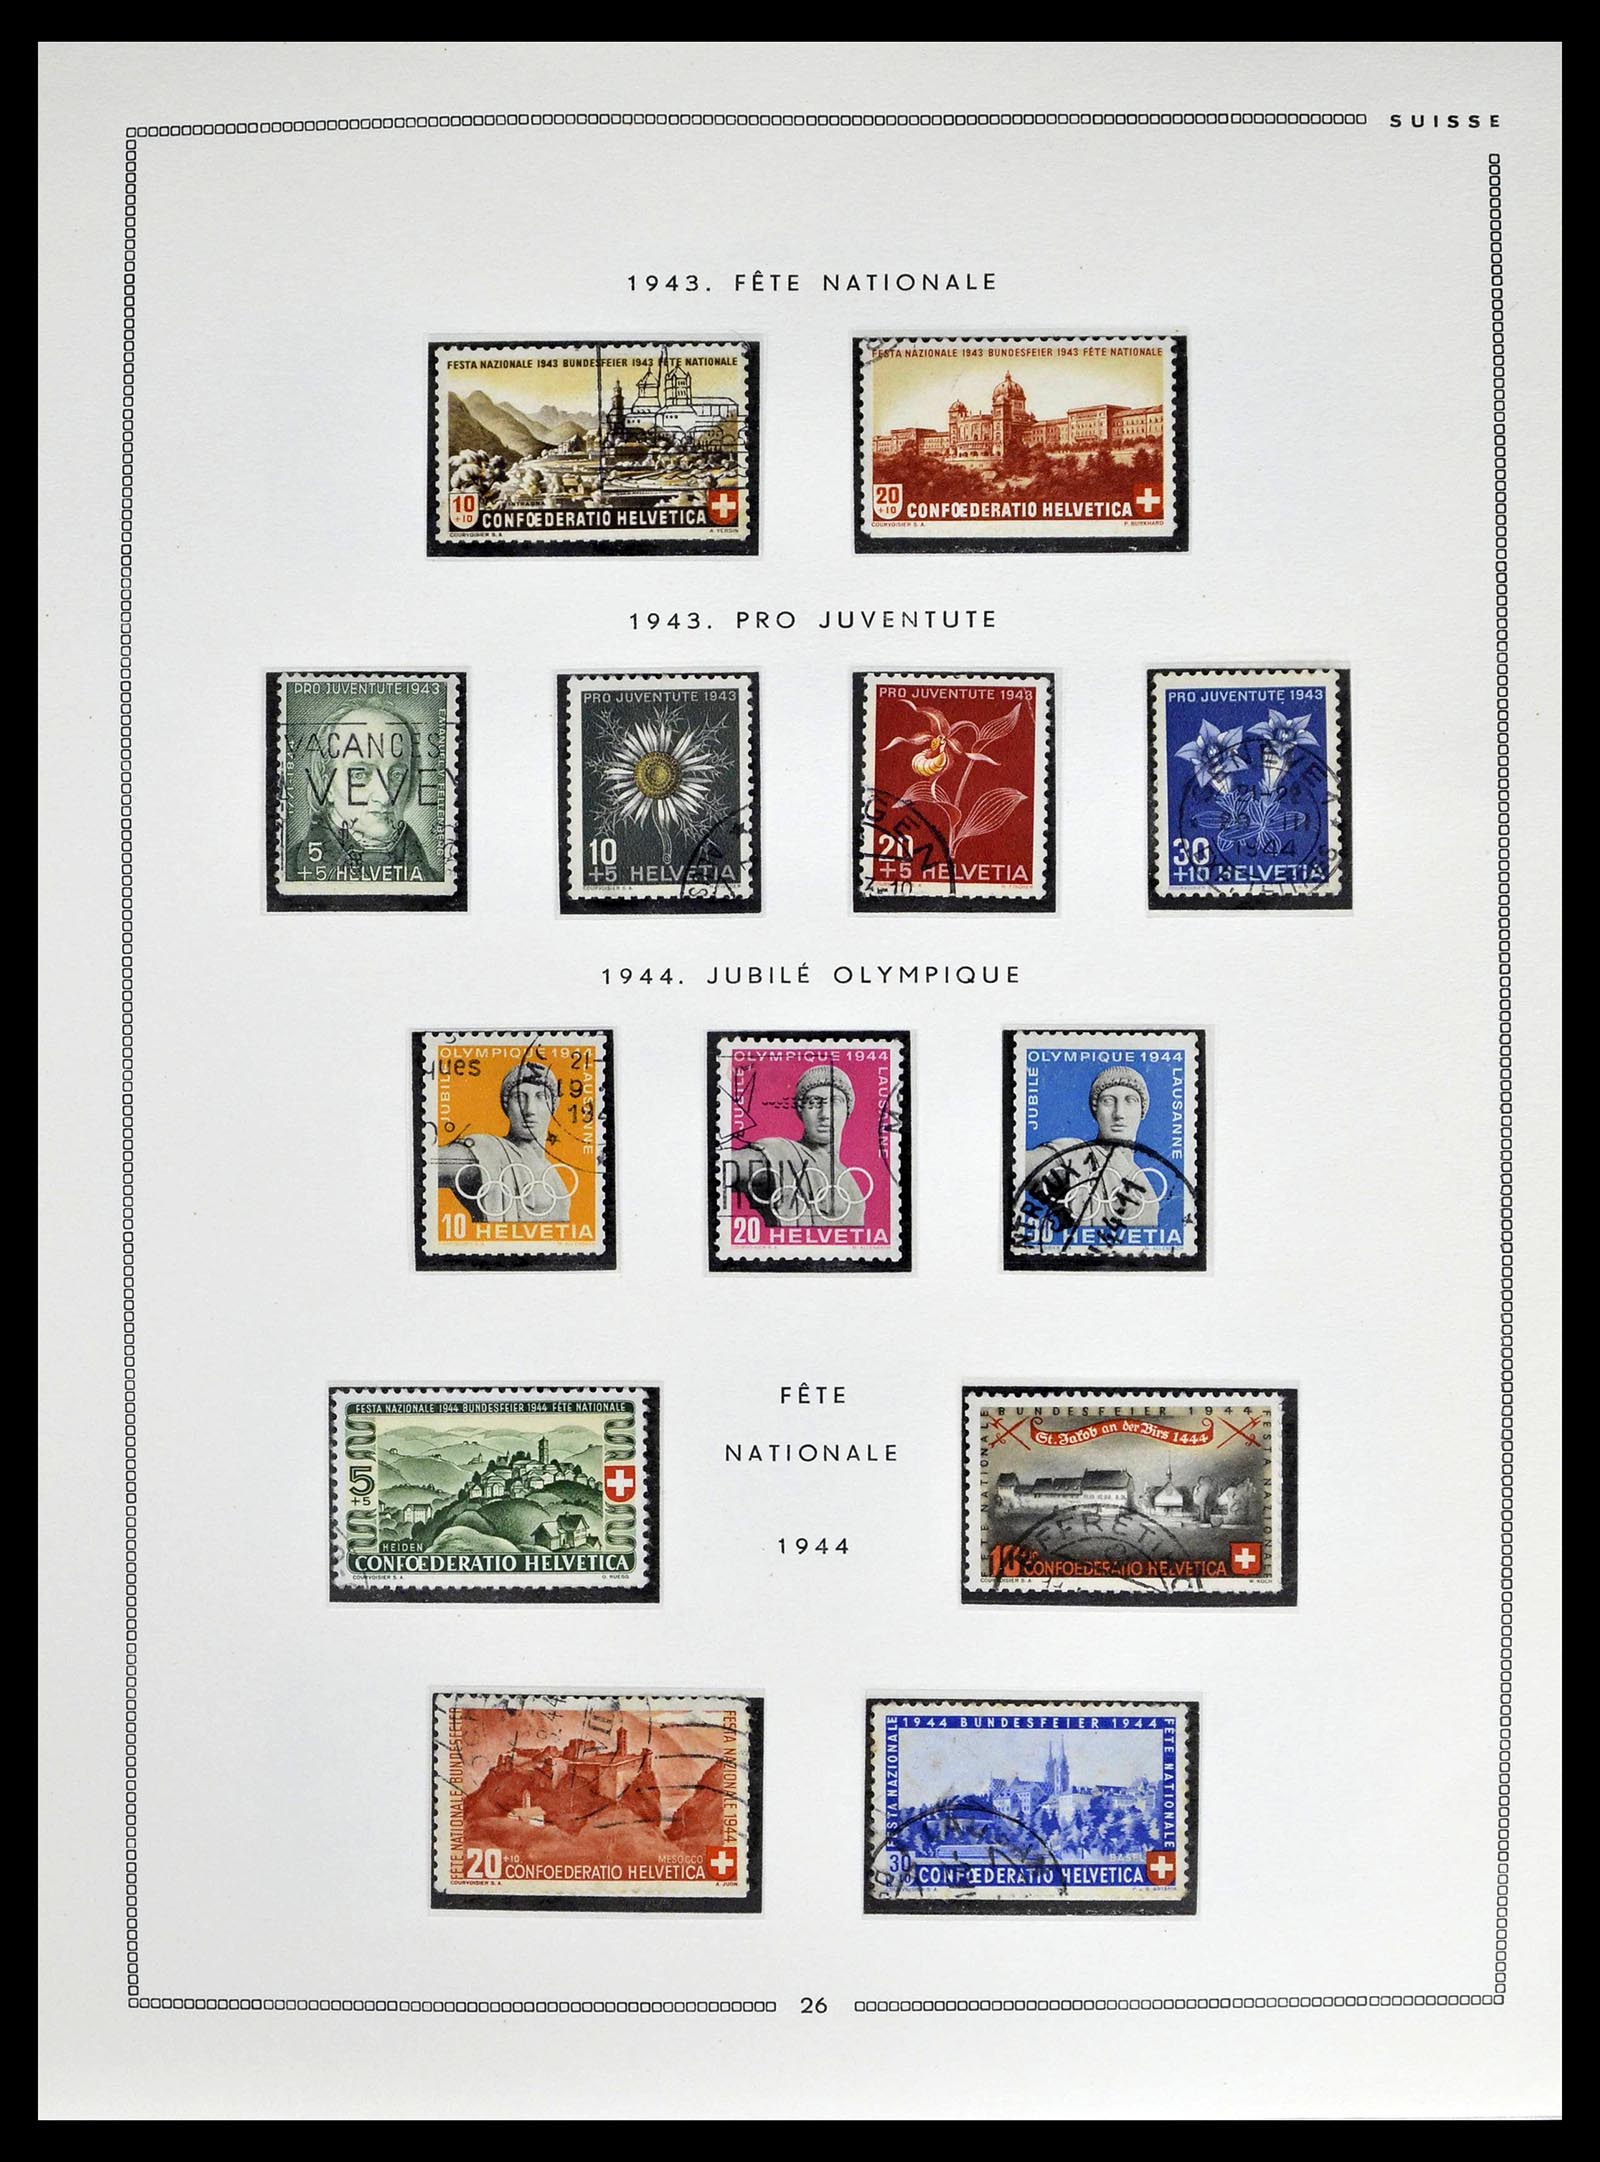 39094 0025 - Stamp collection 39094 Switzerland 1850-2005.